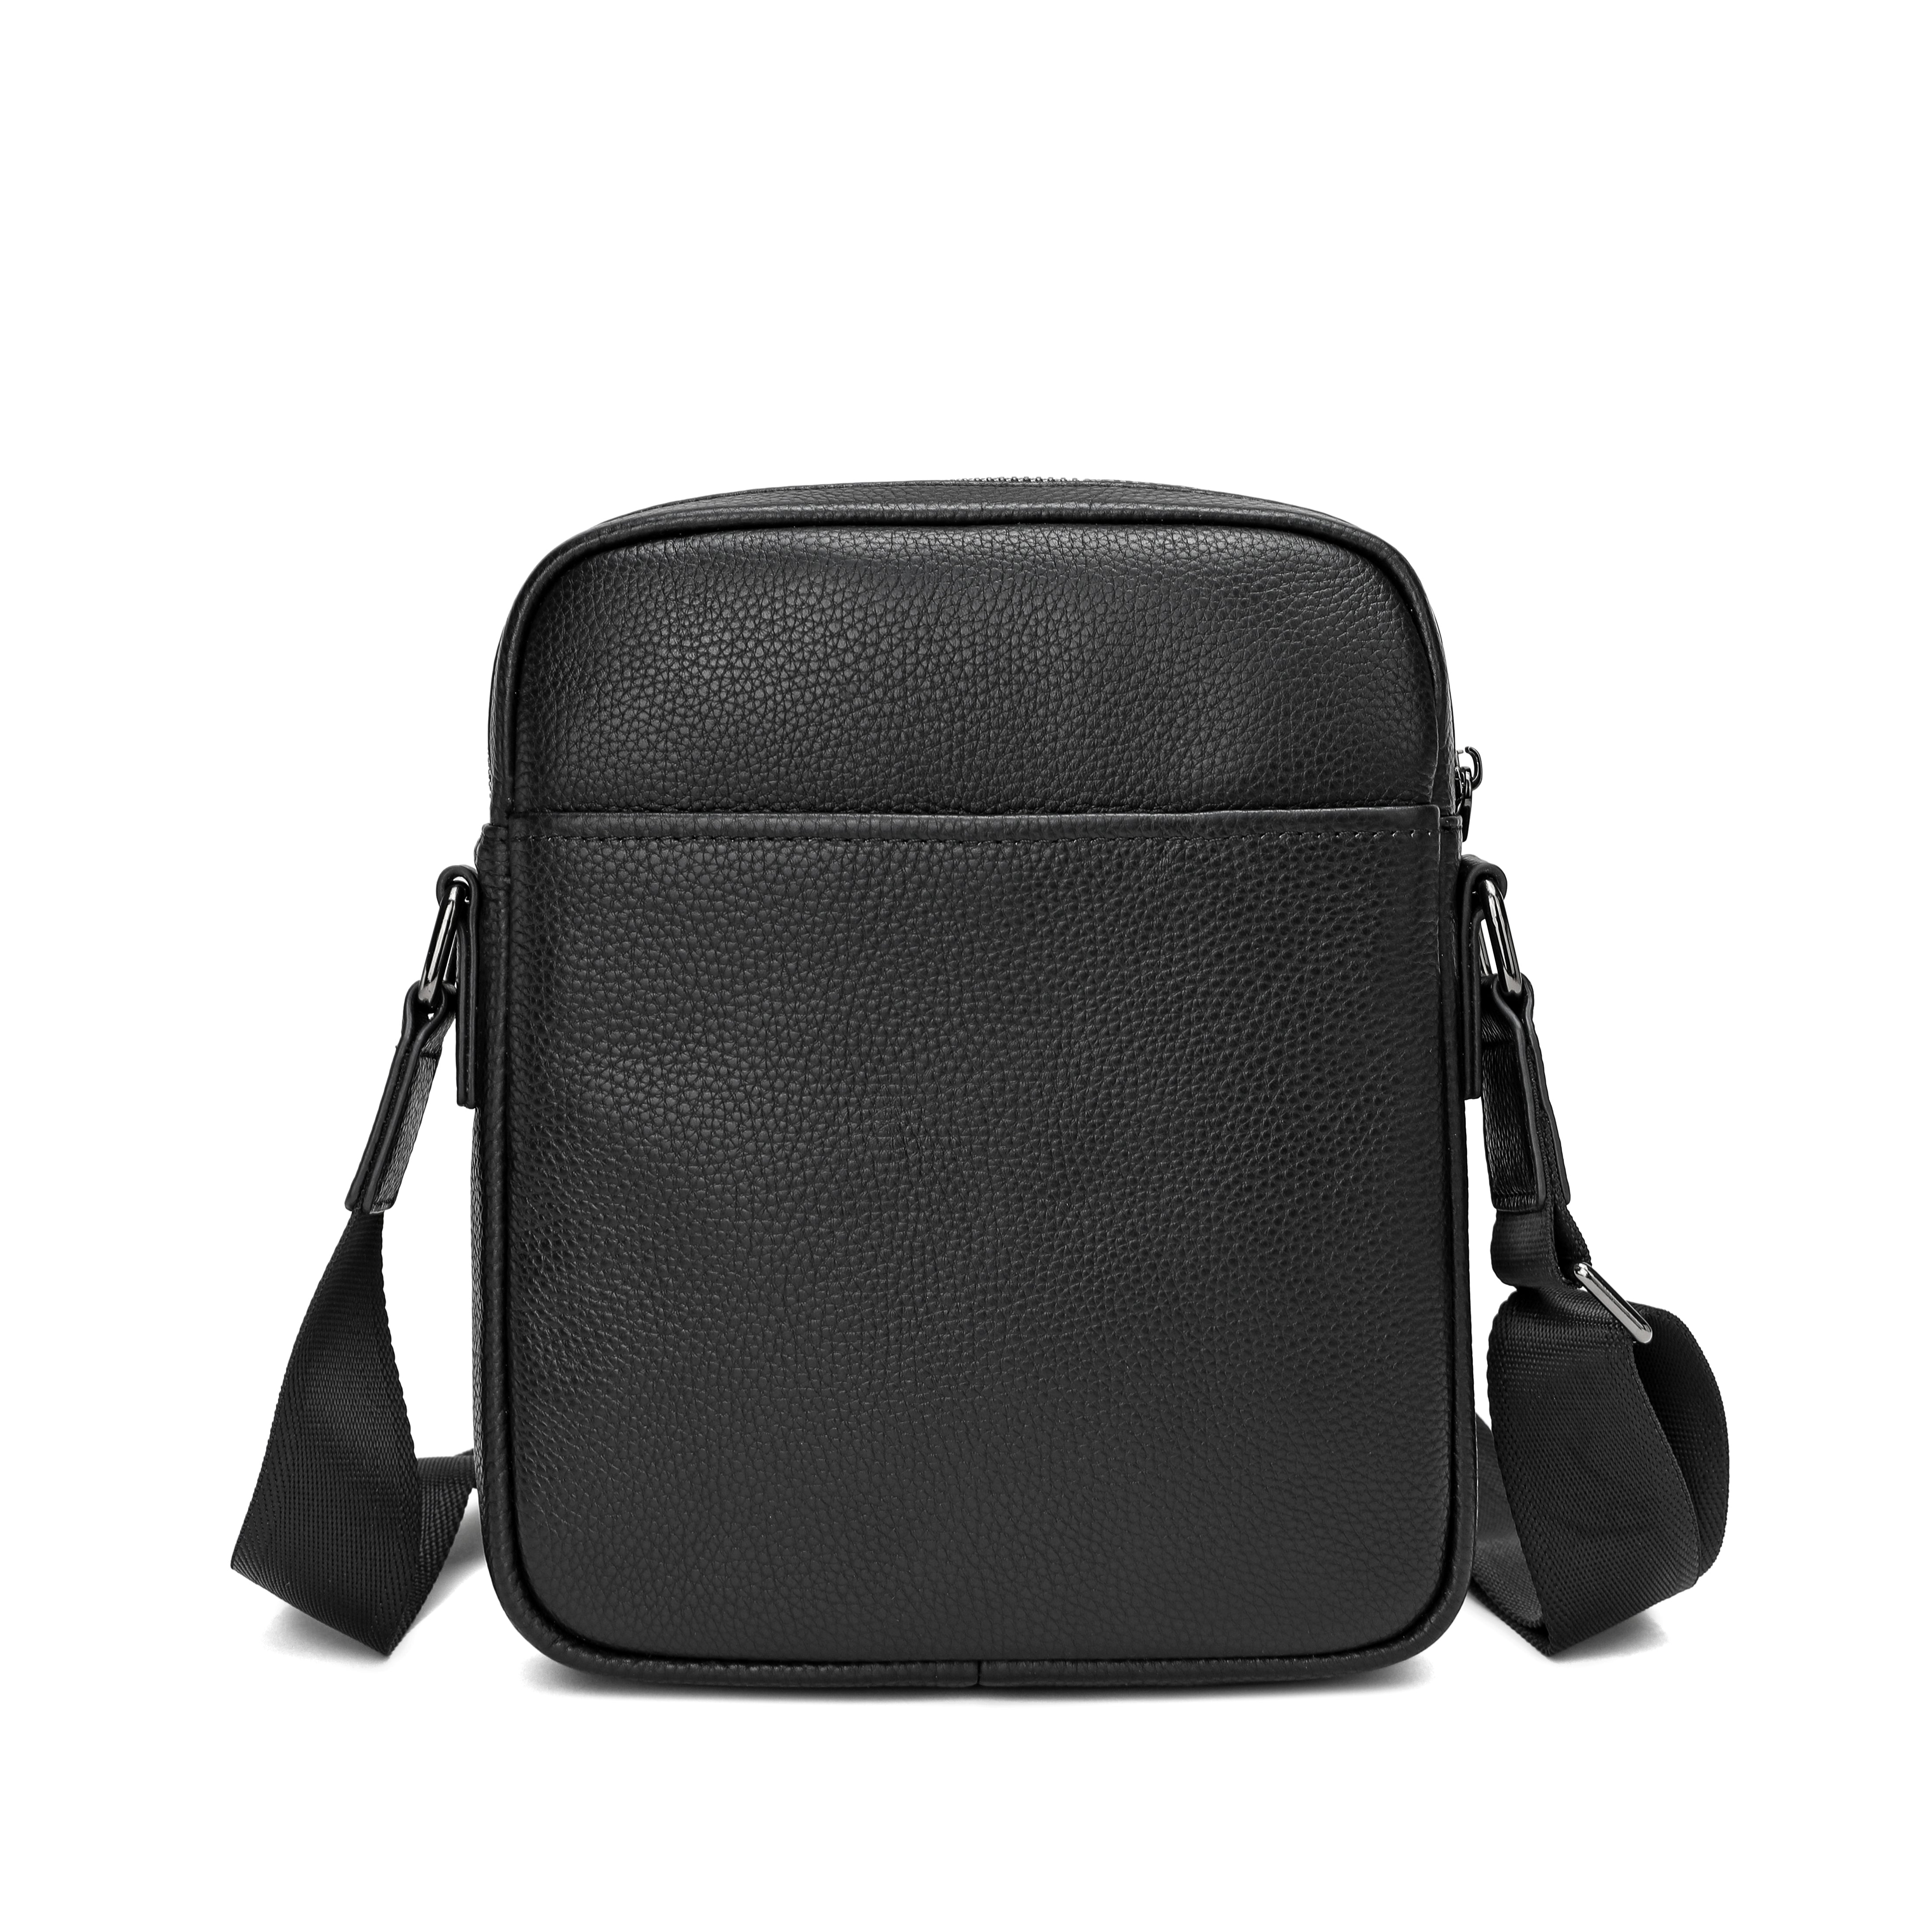 A modern men's hand and shoulder bag, 100% genuine leather, black and brown